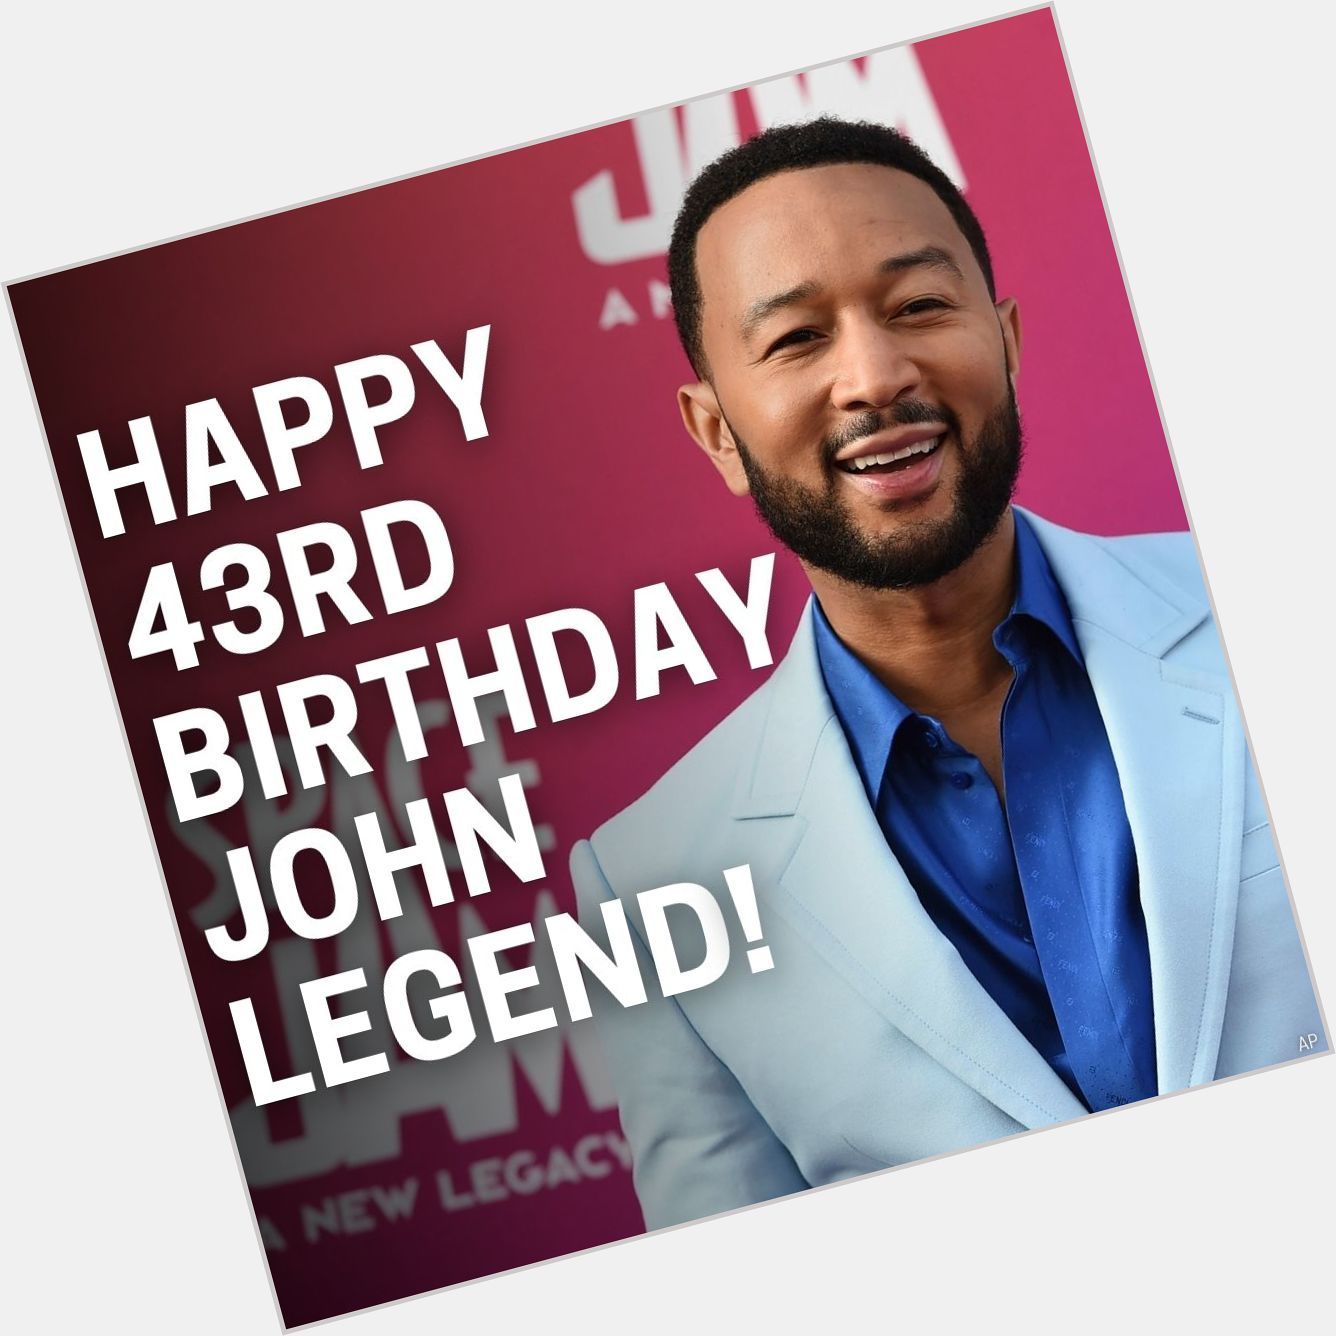 Happy birthday John Legend! 